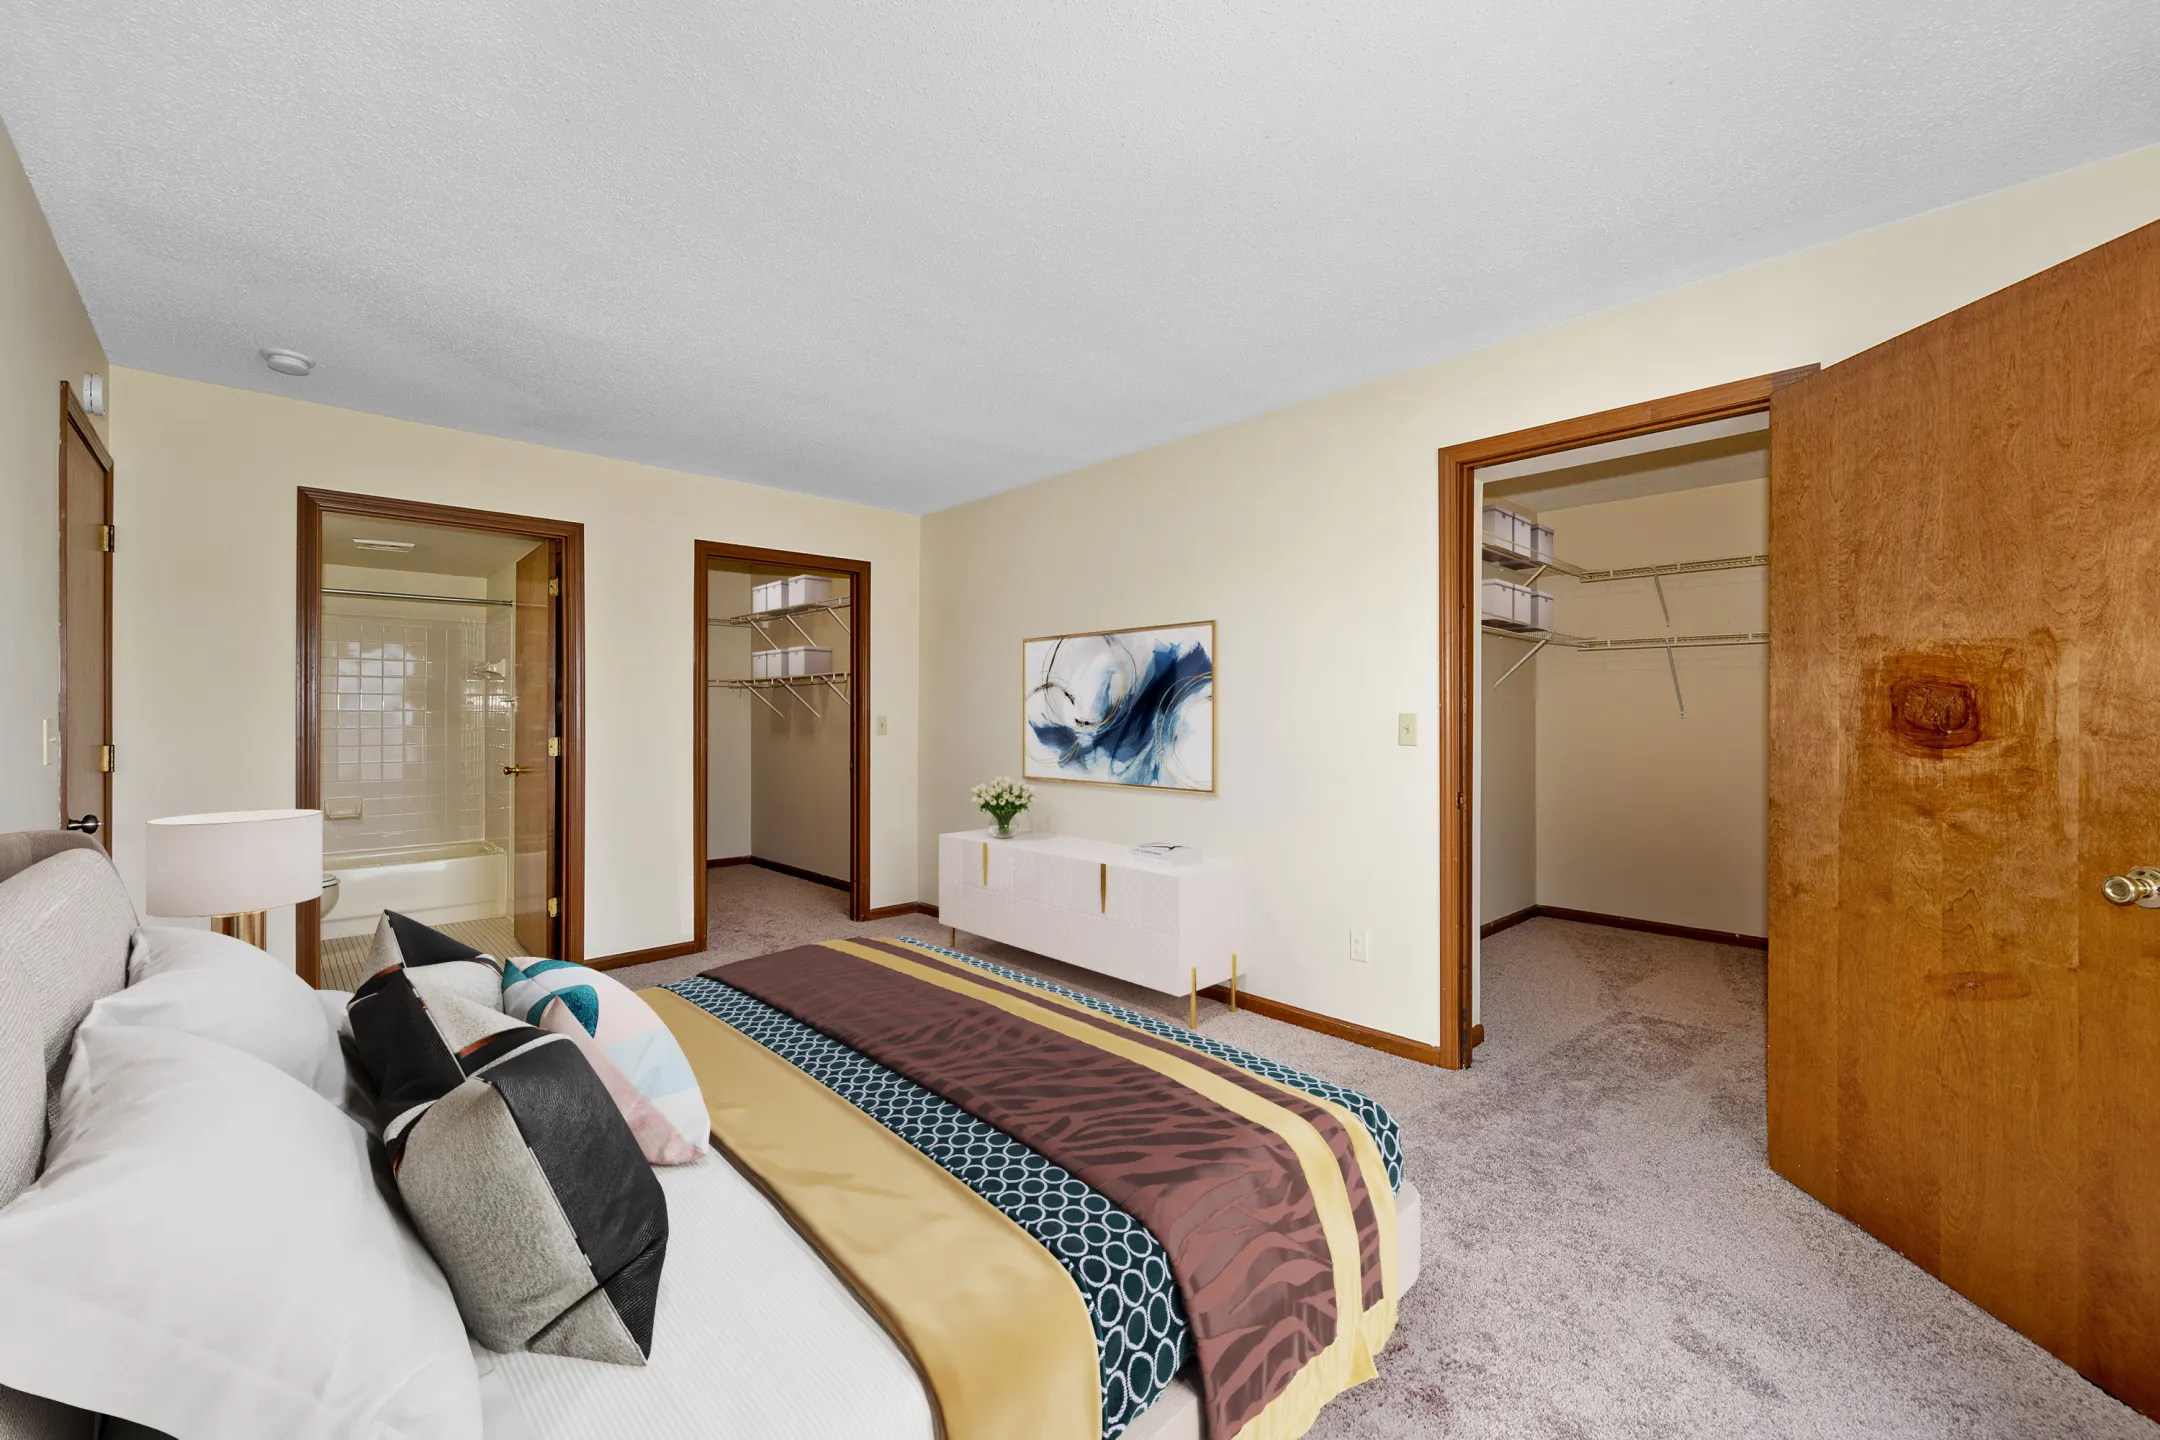 Bedroom - Vantage Pointe West Apartments - Cincinnati, OH